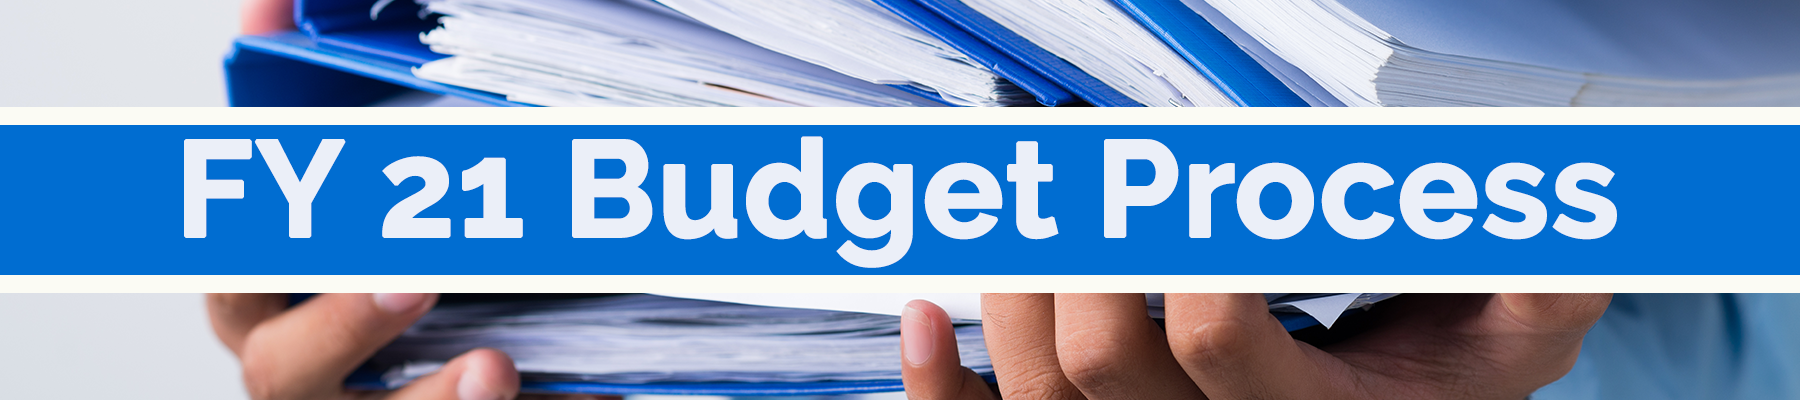 FY 21 Budget Process - Documents & Presentations